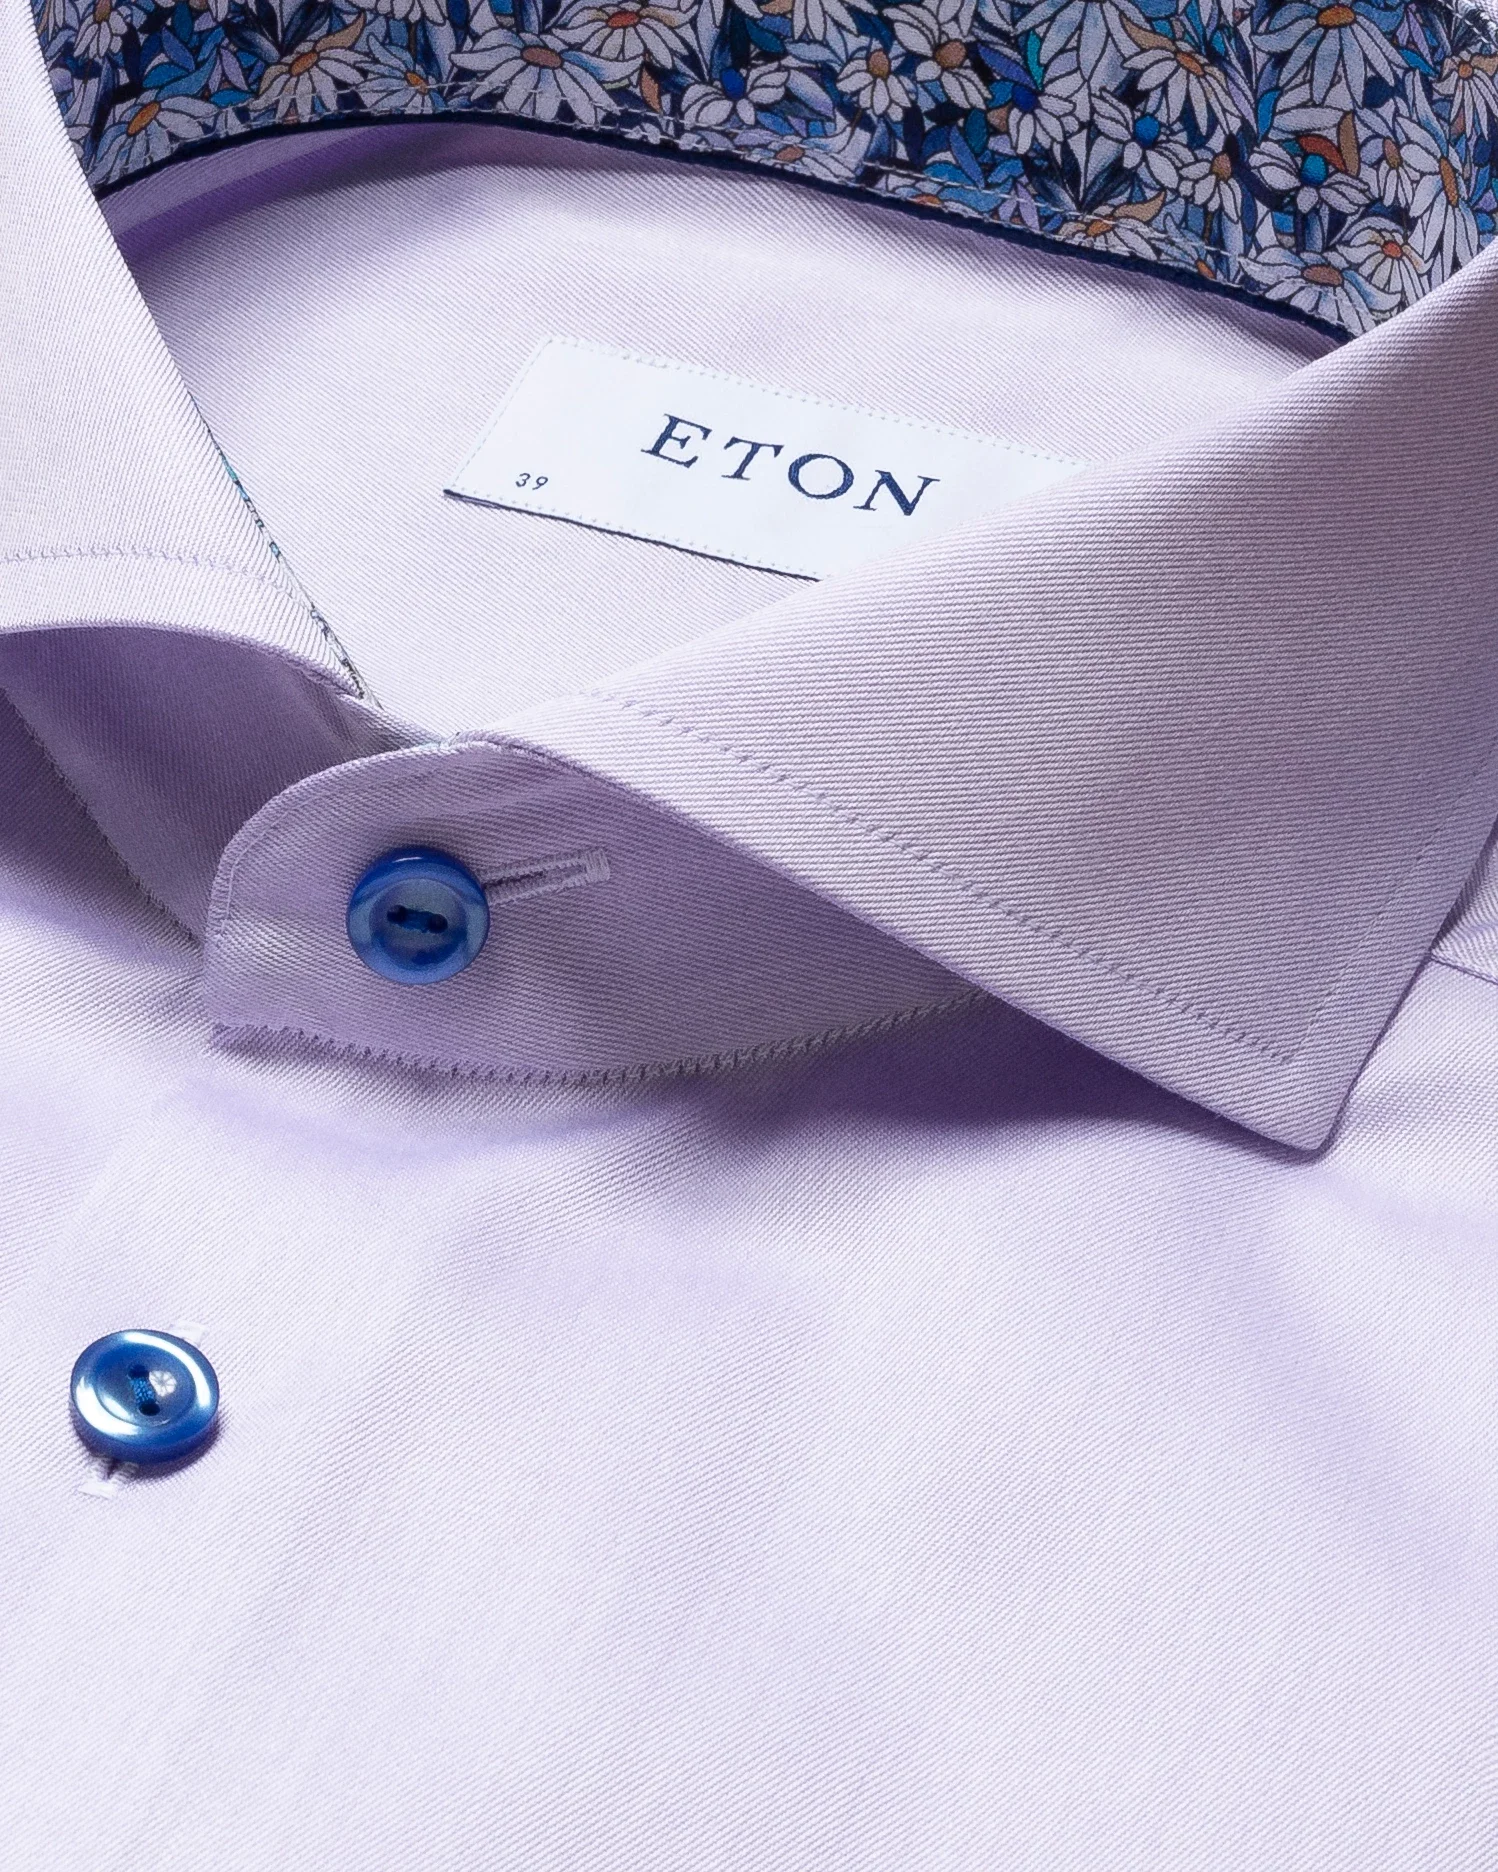 Eton - pink signature twill shirt printed details extreme cut away